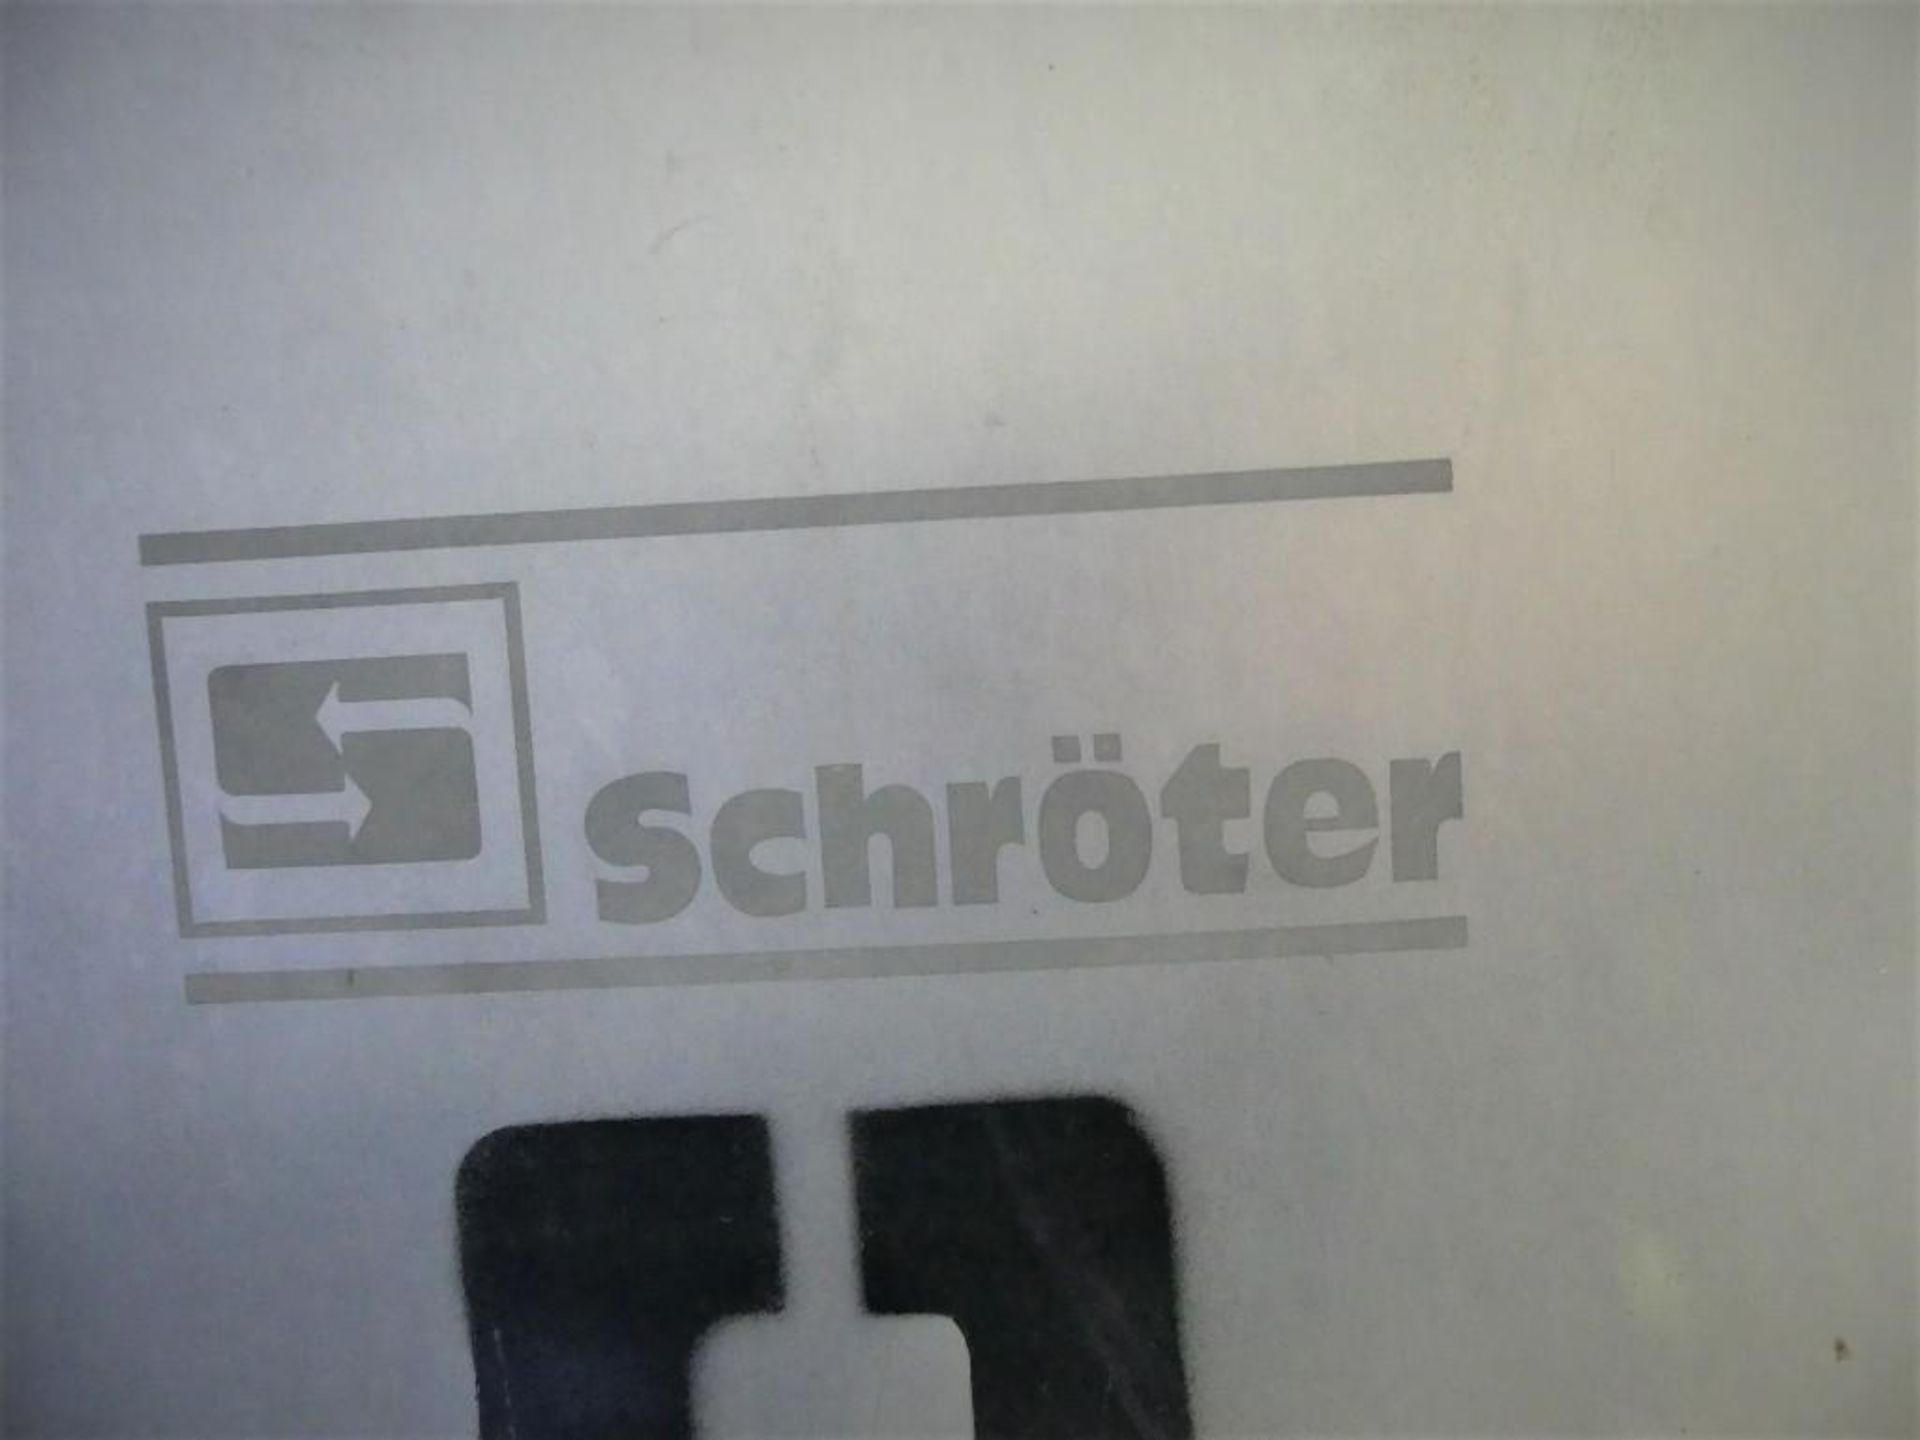 Schroeter Smoke Generator - Image 4 of 4